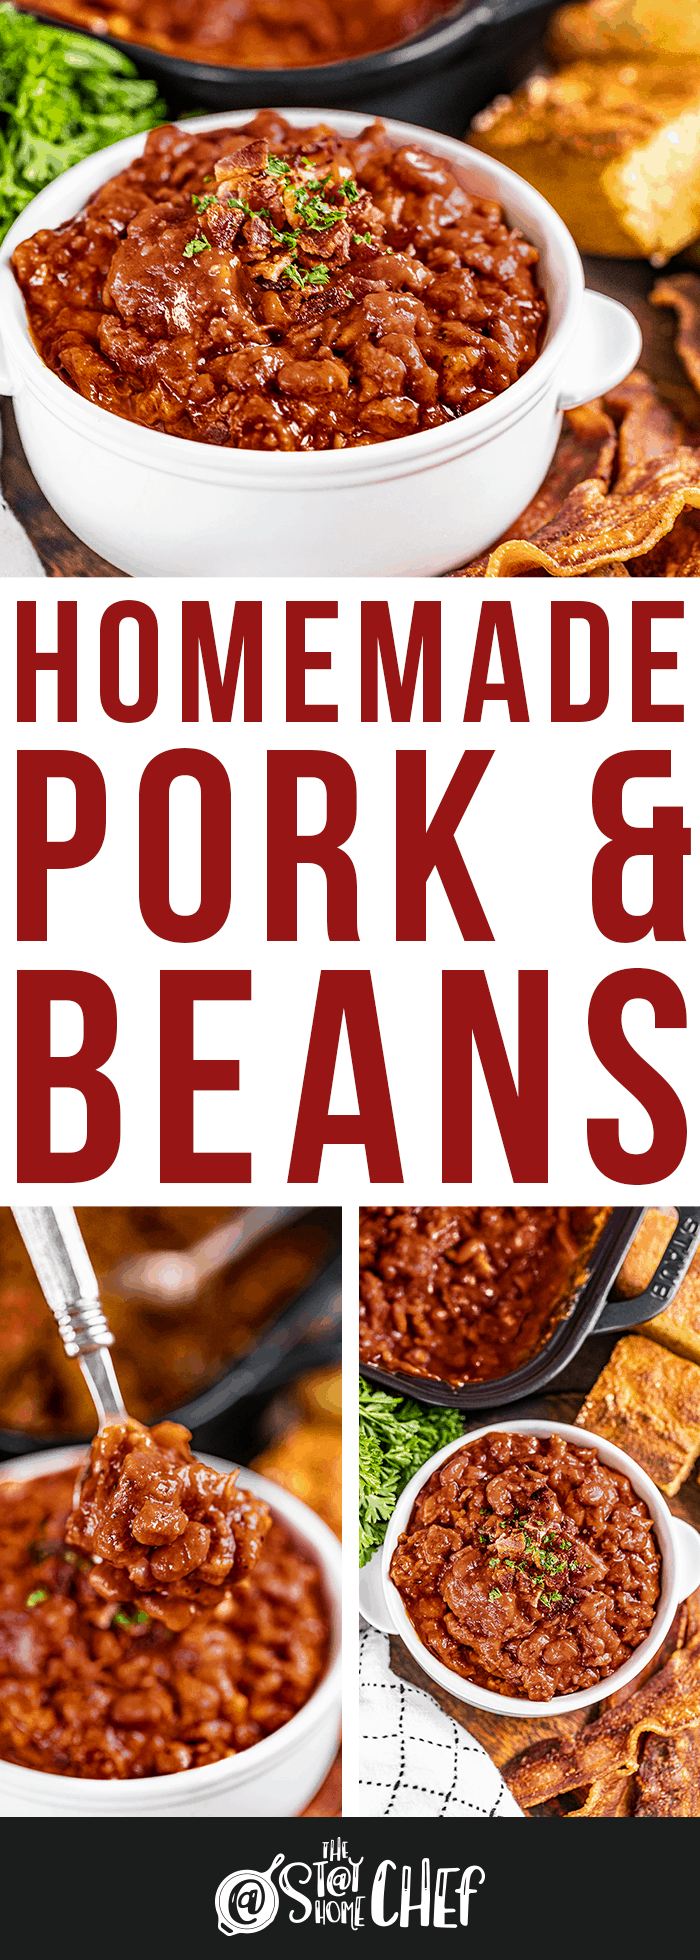 Homemade Pork and Beans